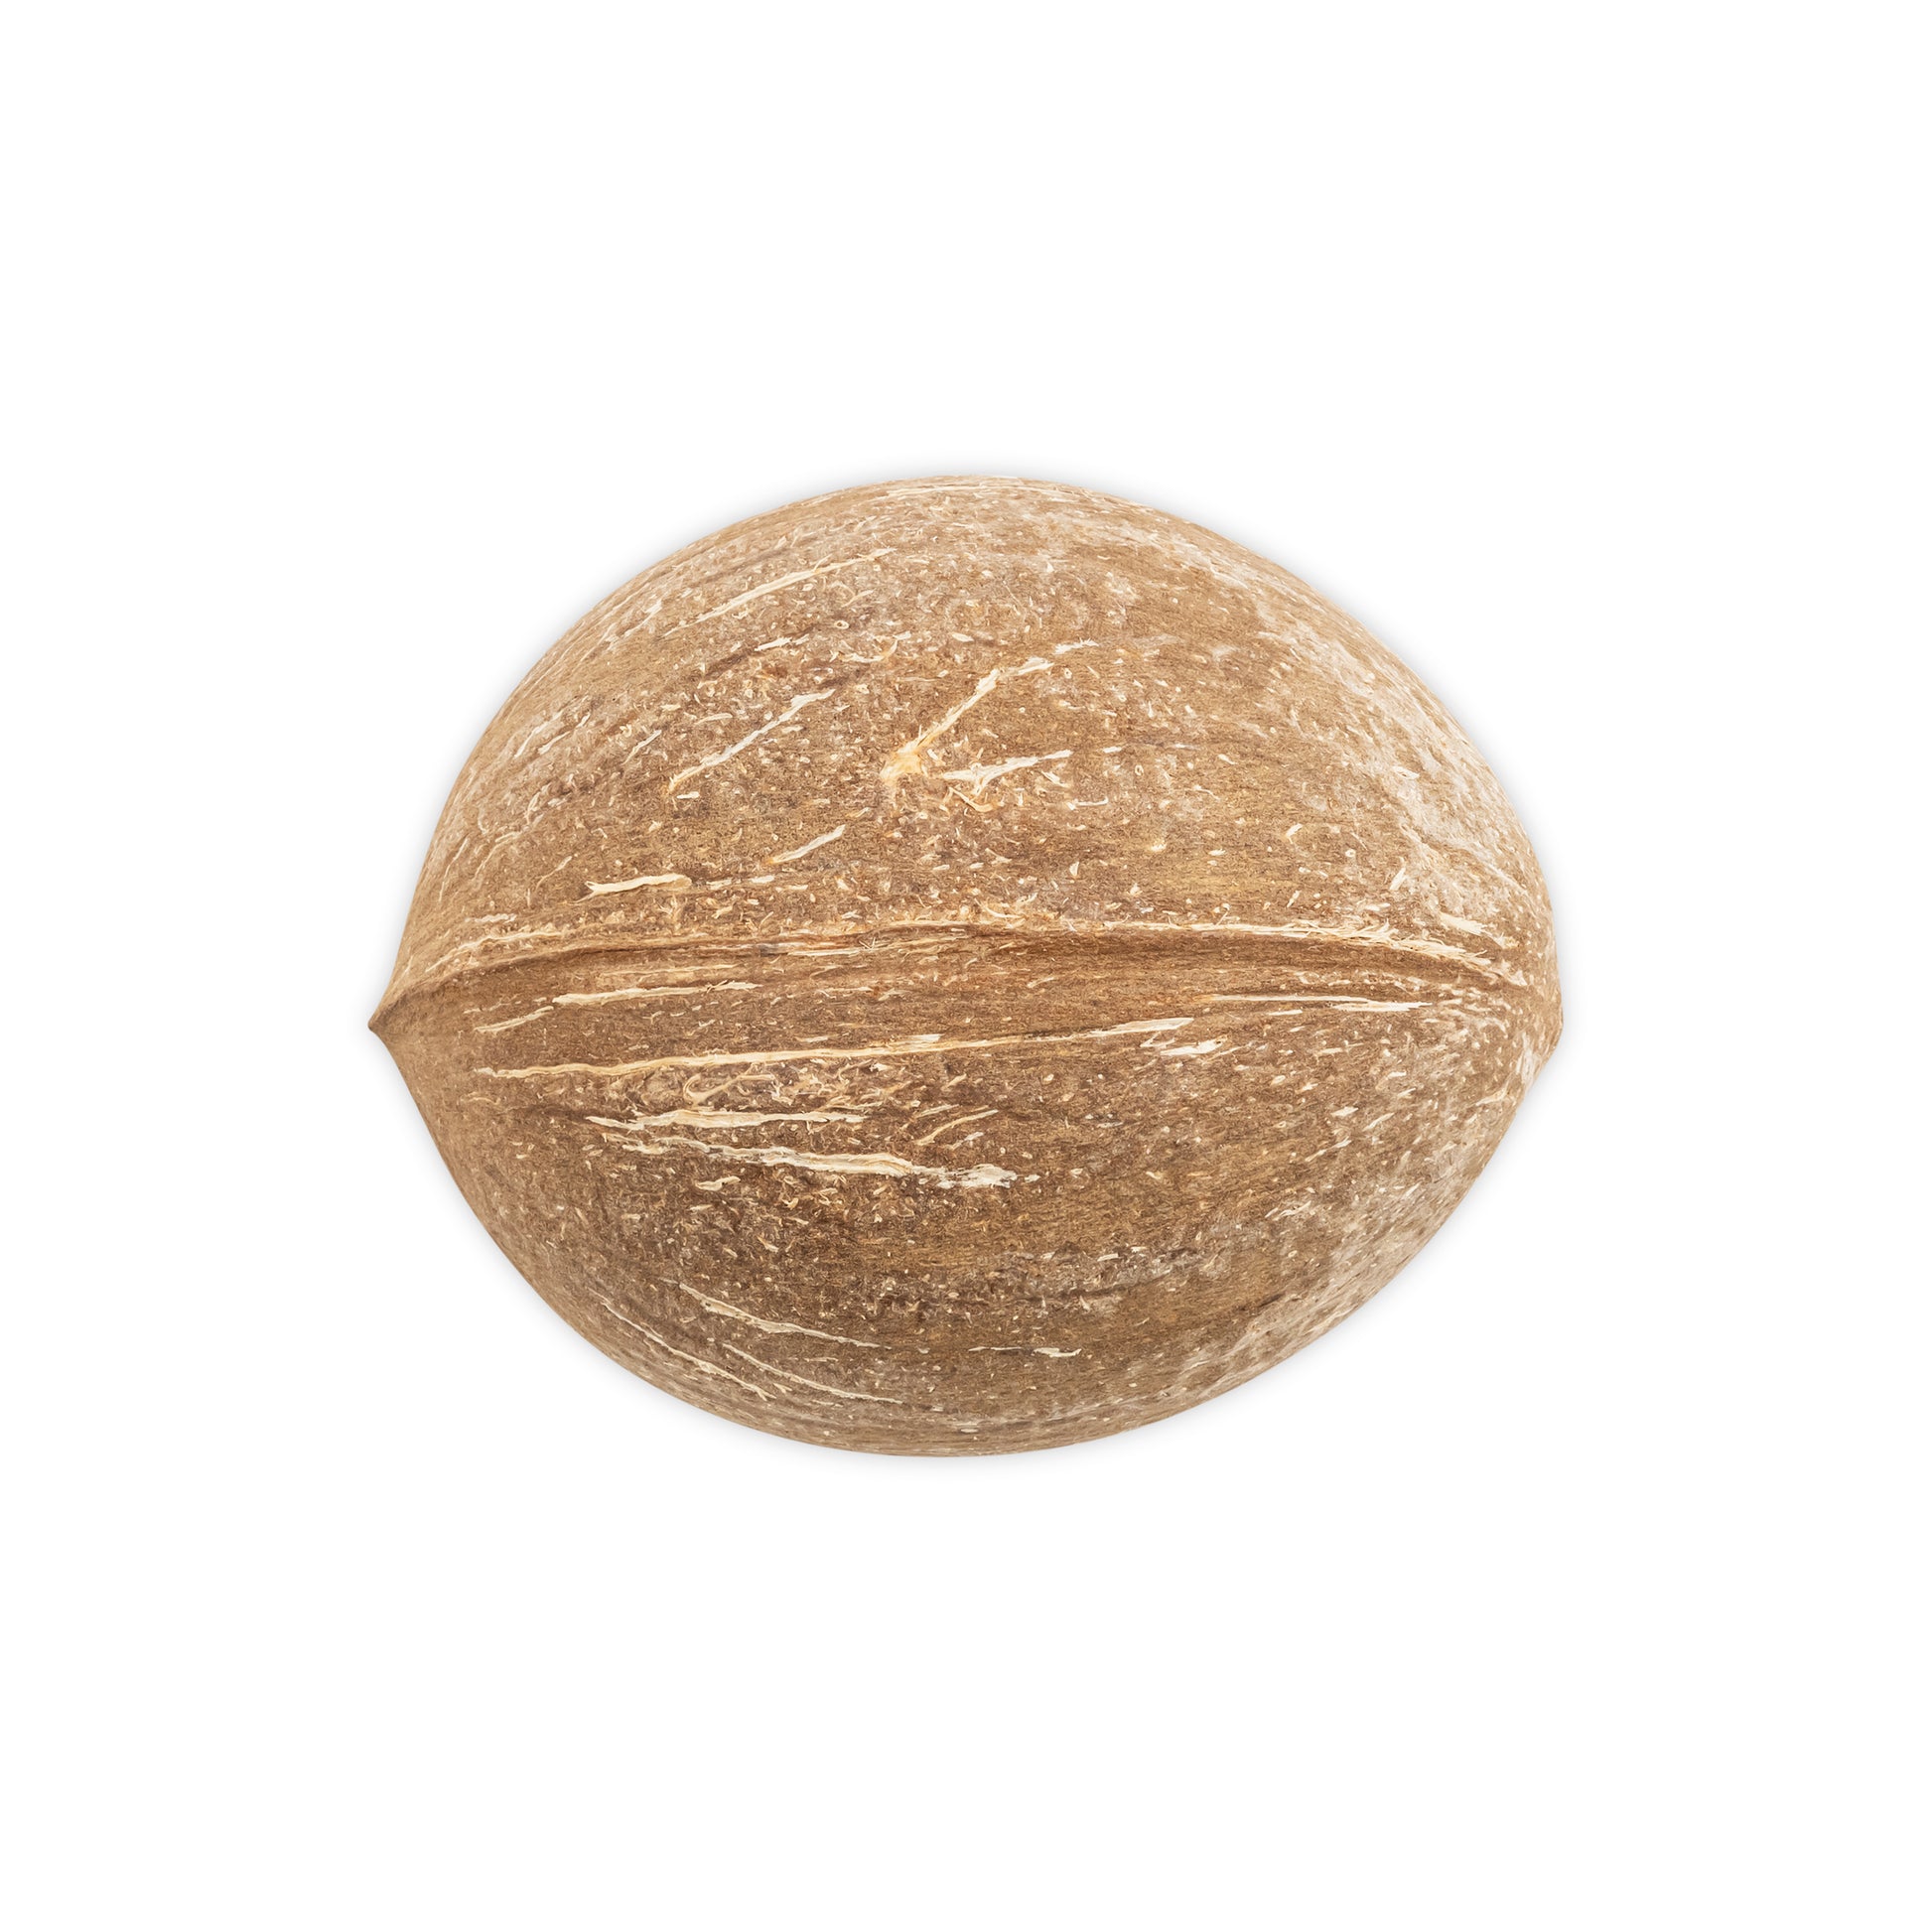 bottom of small coconut shell